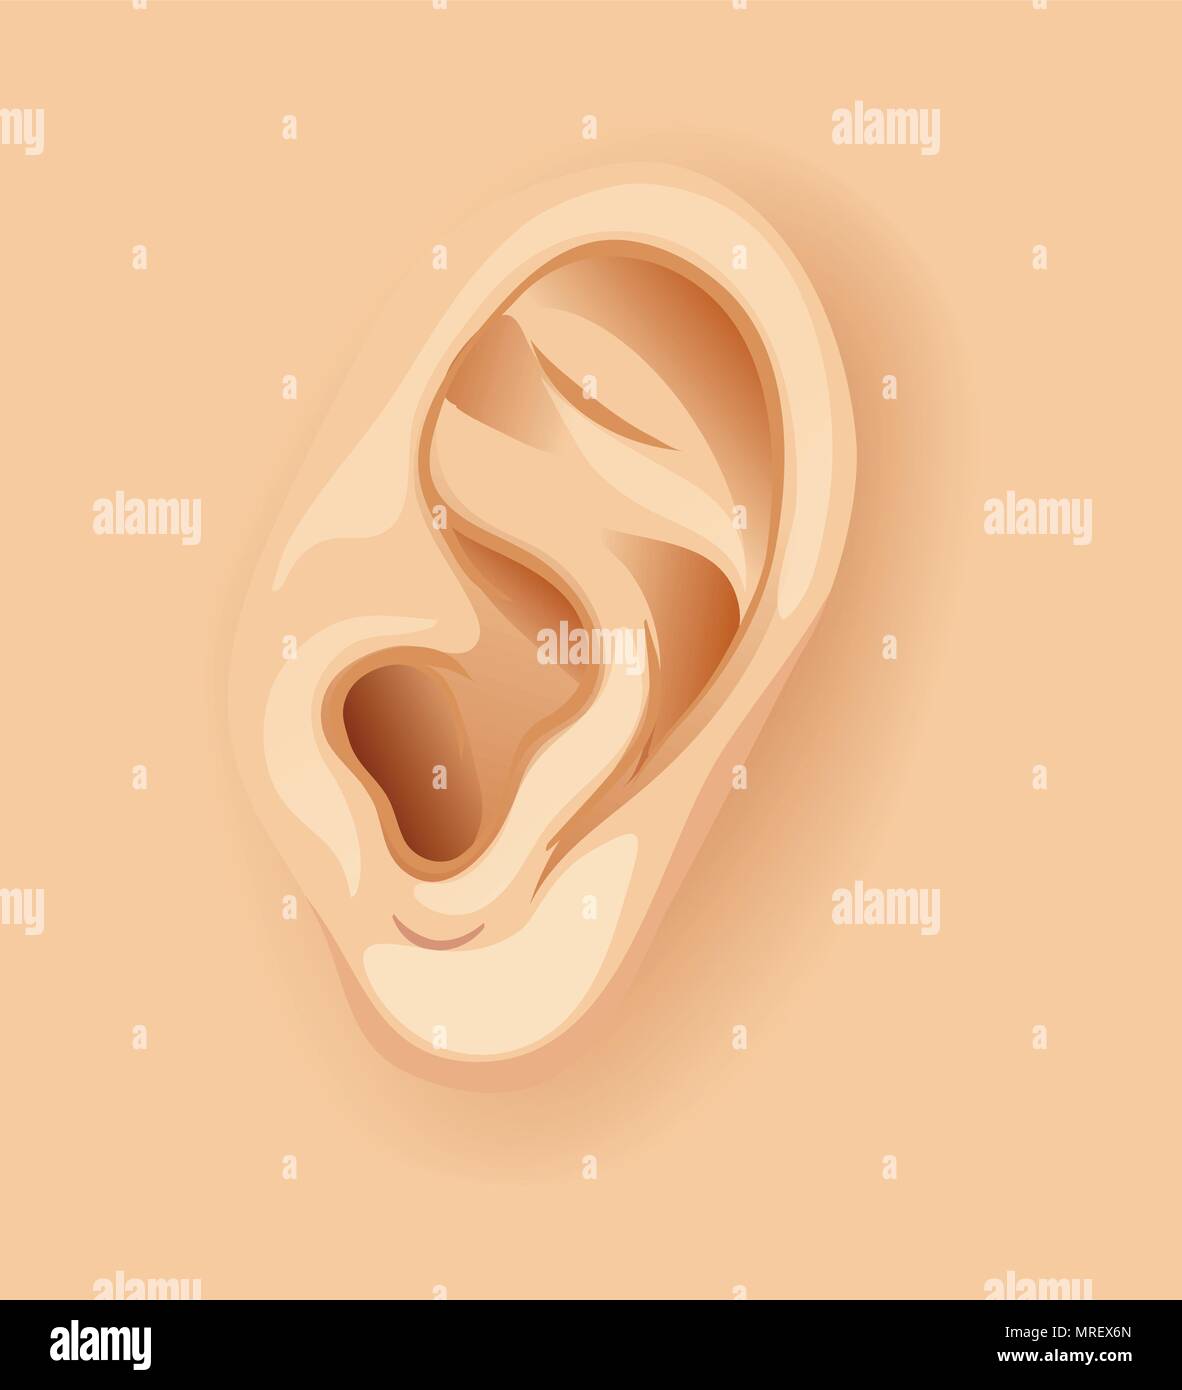 A Human Ear Close Up illustration Stock Vector